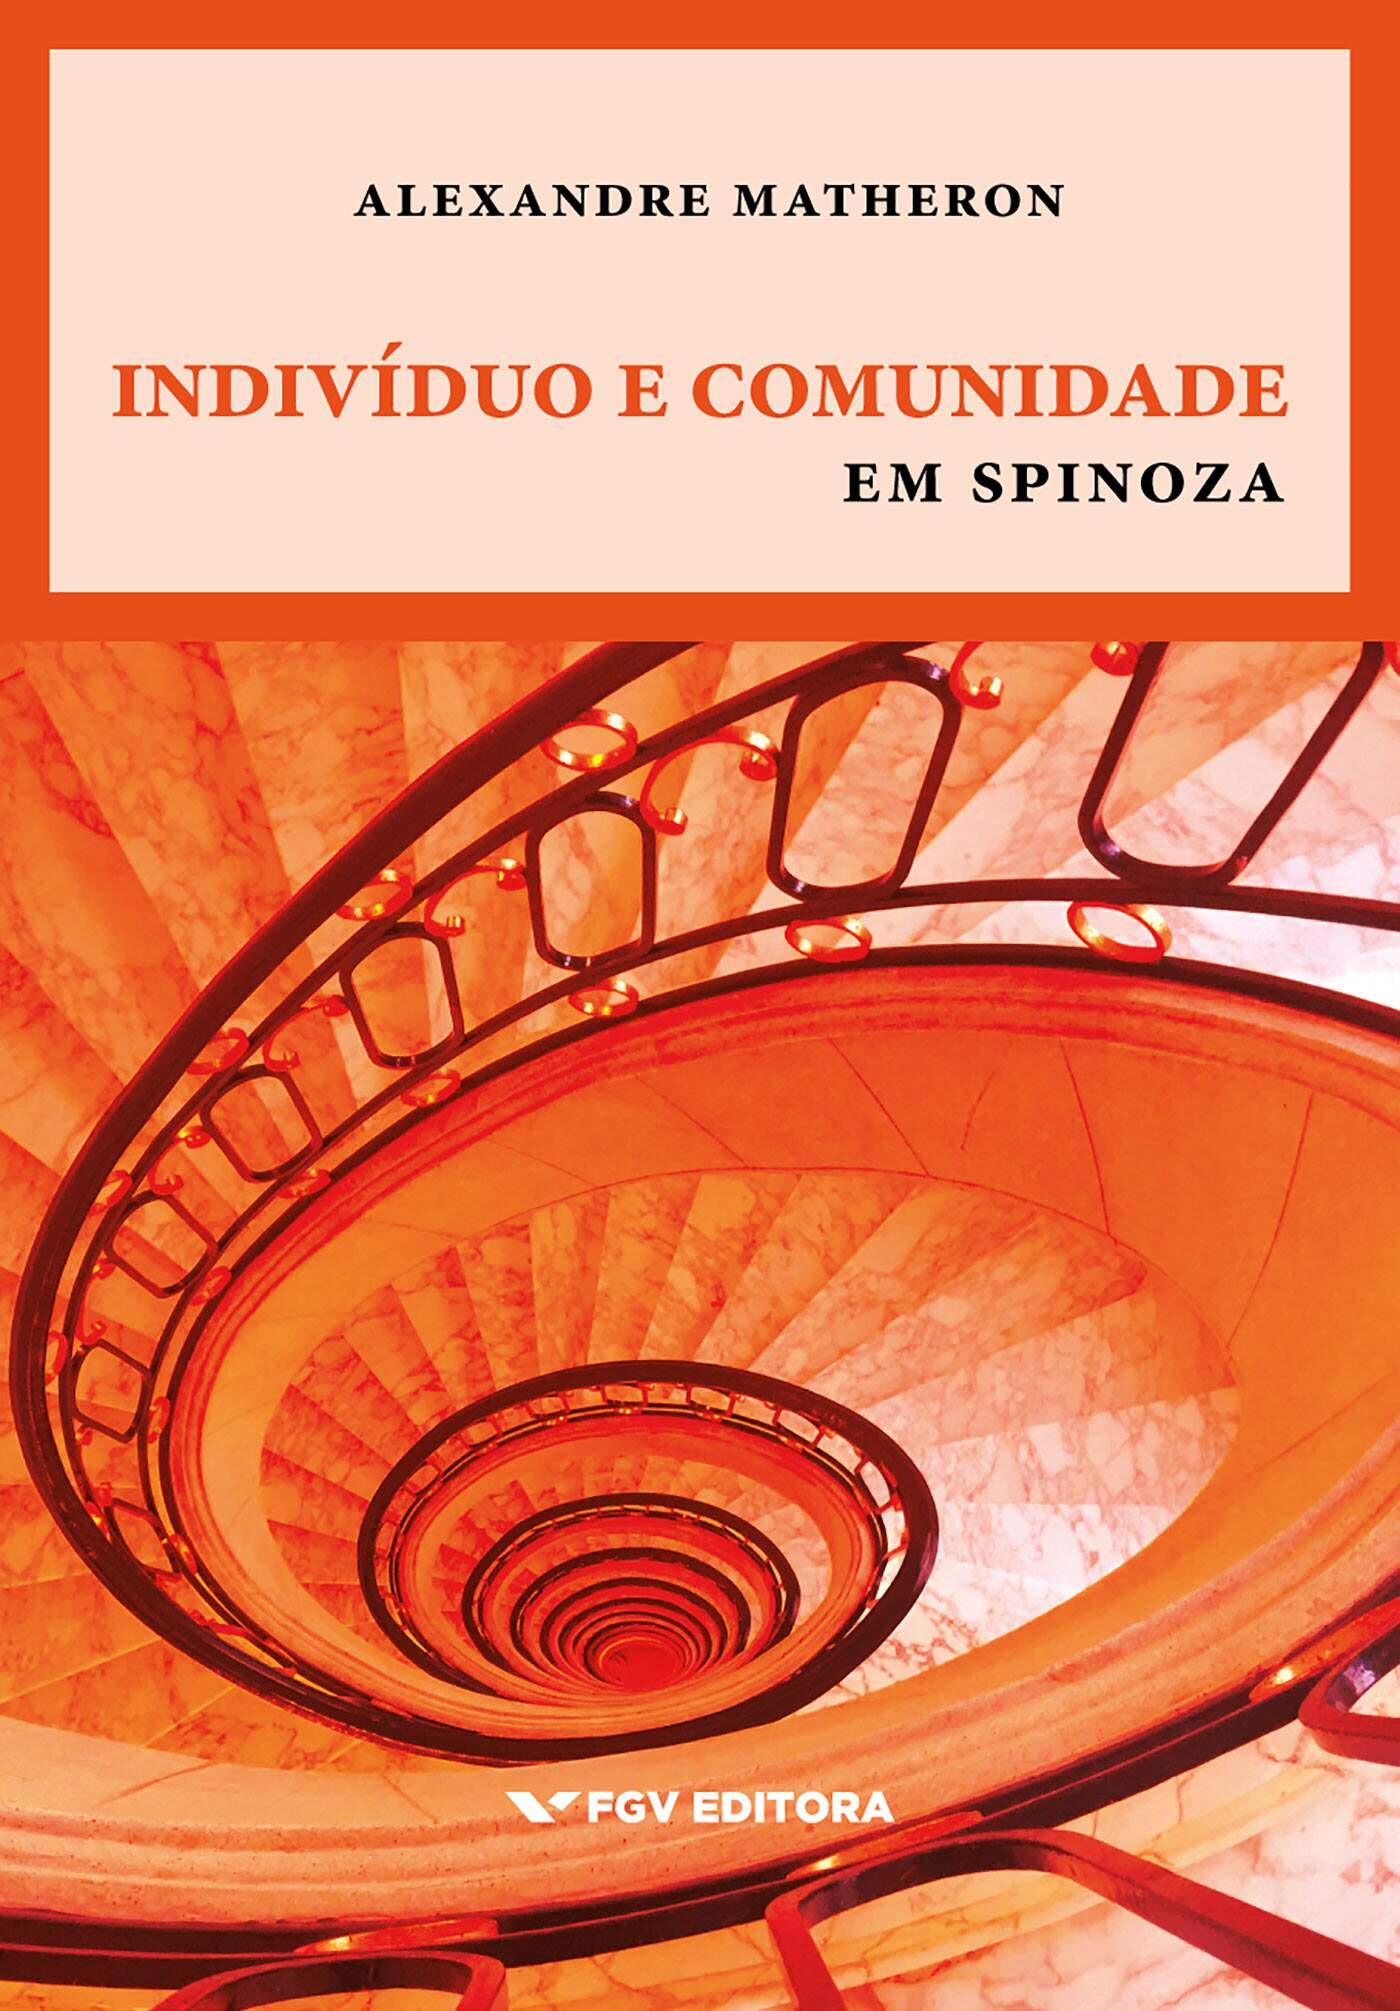 "Indivíduo e comunidade em Spinoza",